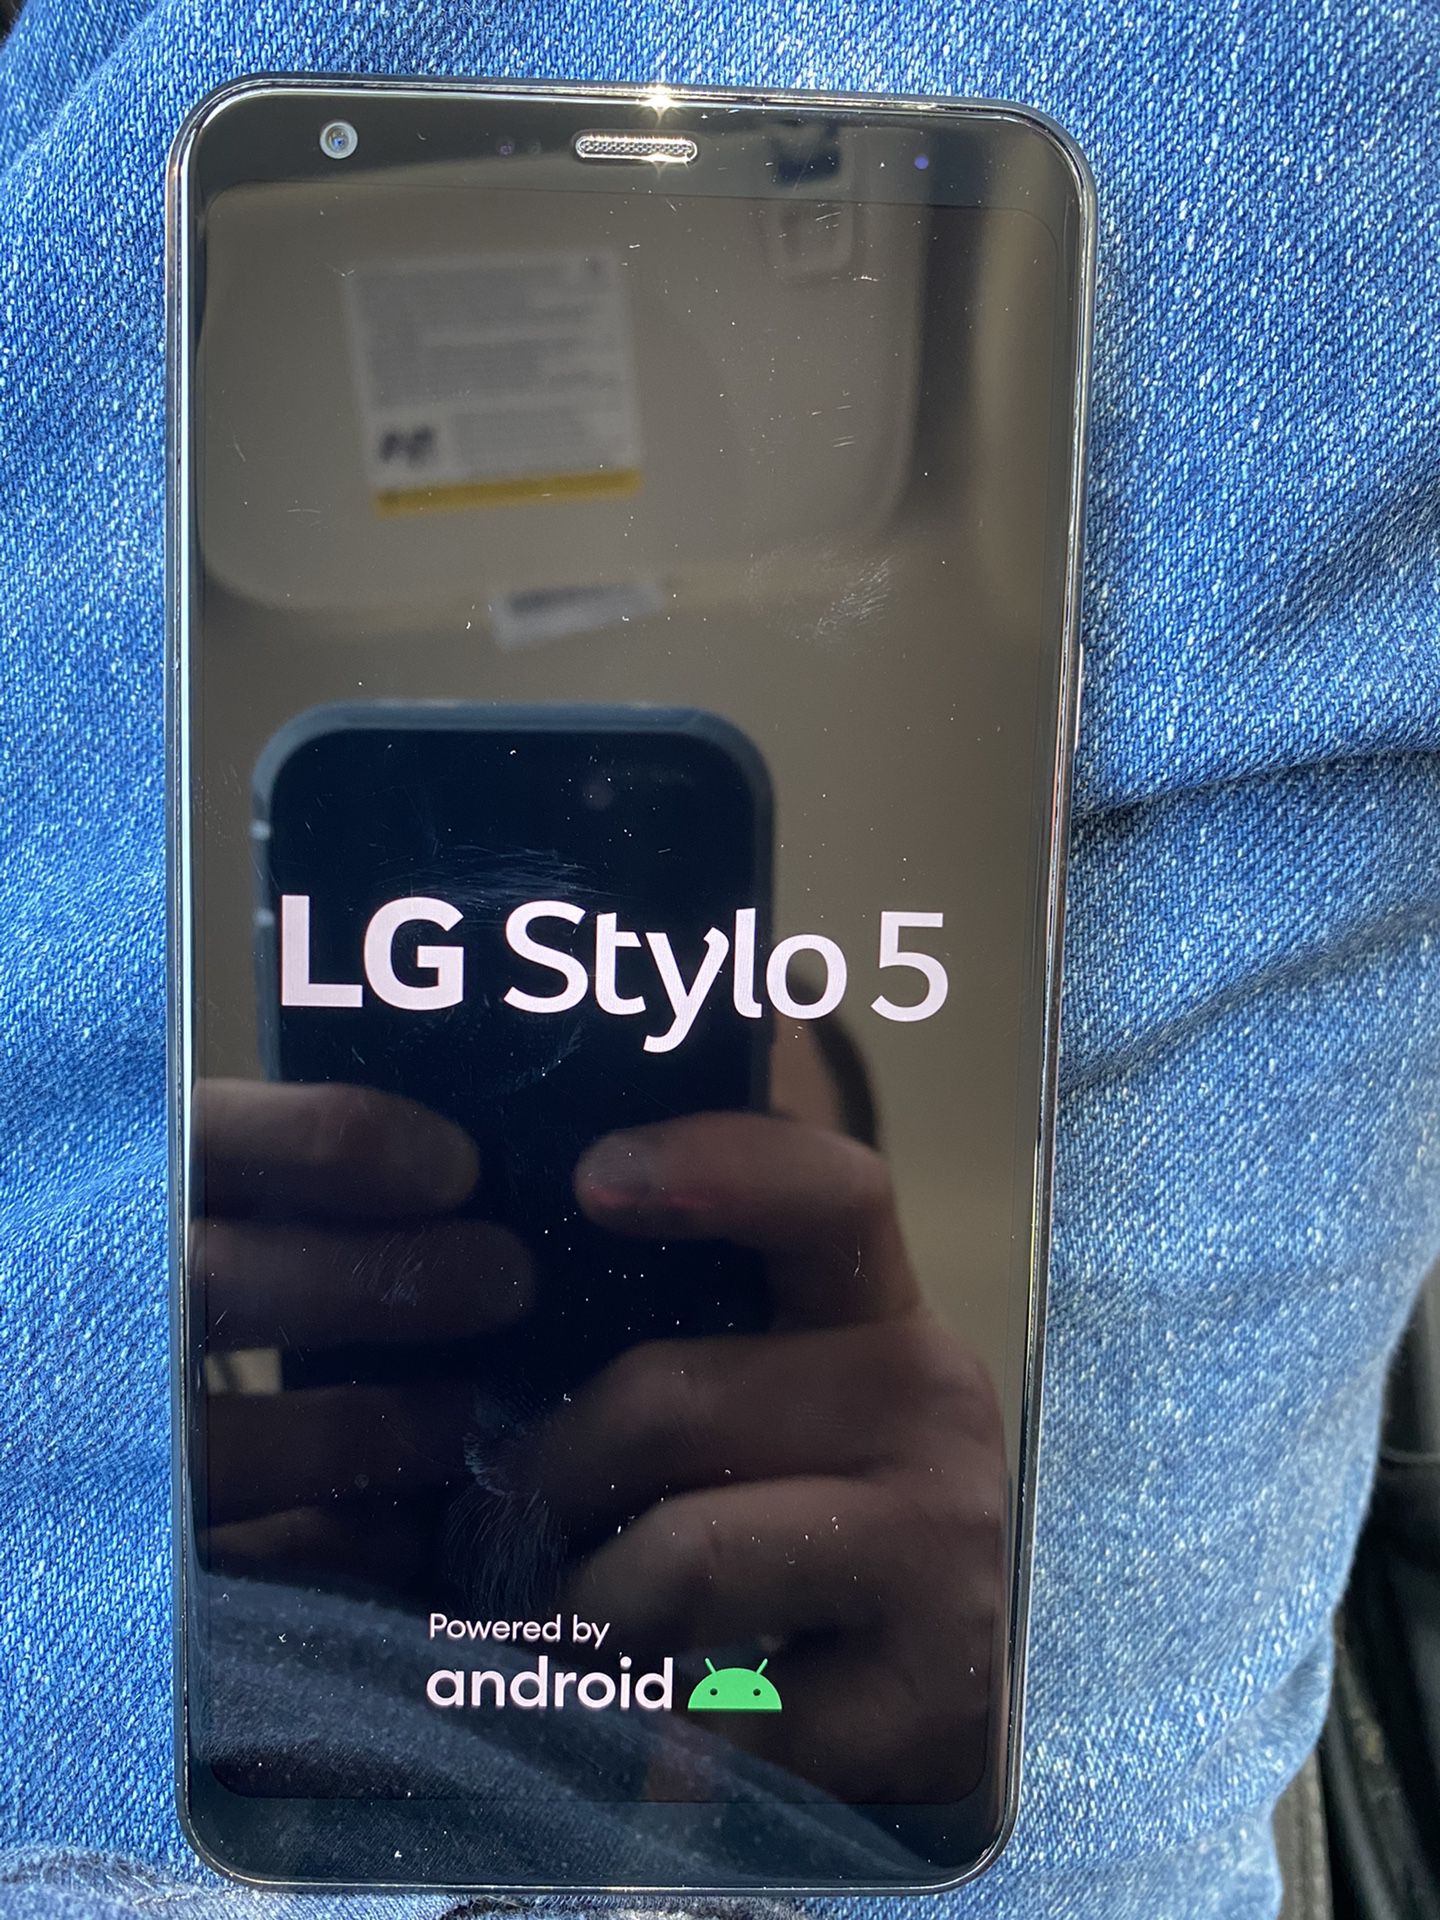 LG Stylo 5 unlocked